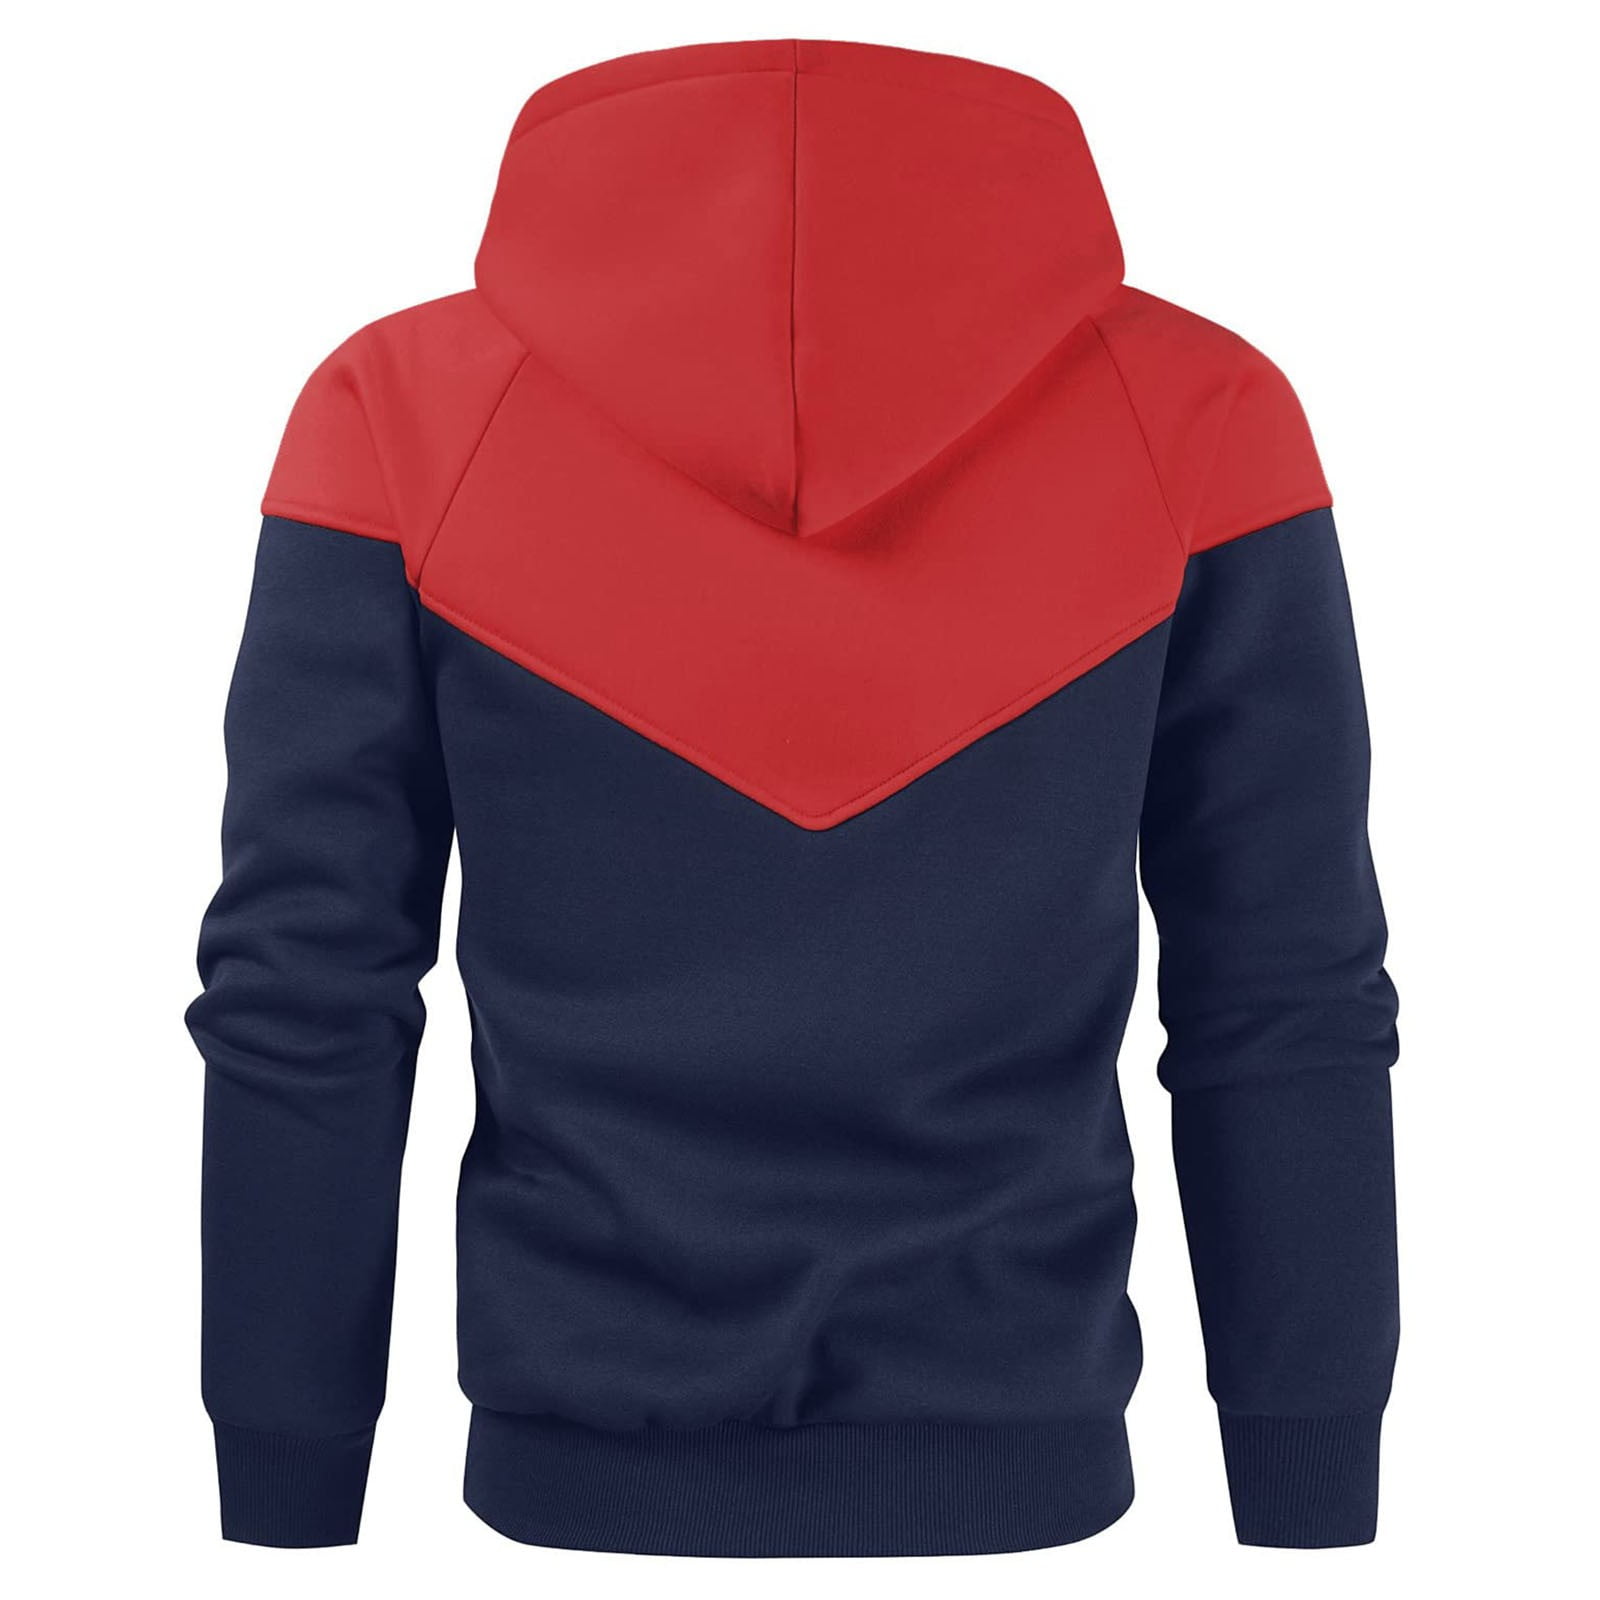 LEEy-world Men'S Fashion Hoodies & Sweatshirts Crewneck, Powerblend Crew,  Comfortable Sweatshirts for Men, Block Logo Red,XL